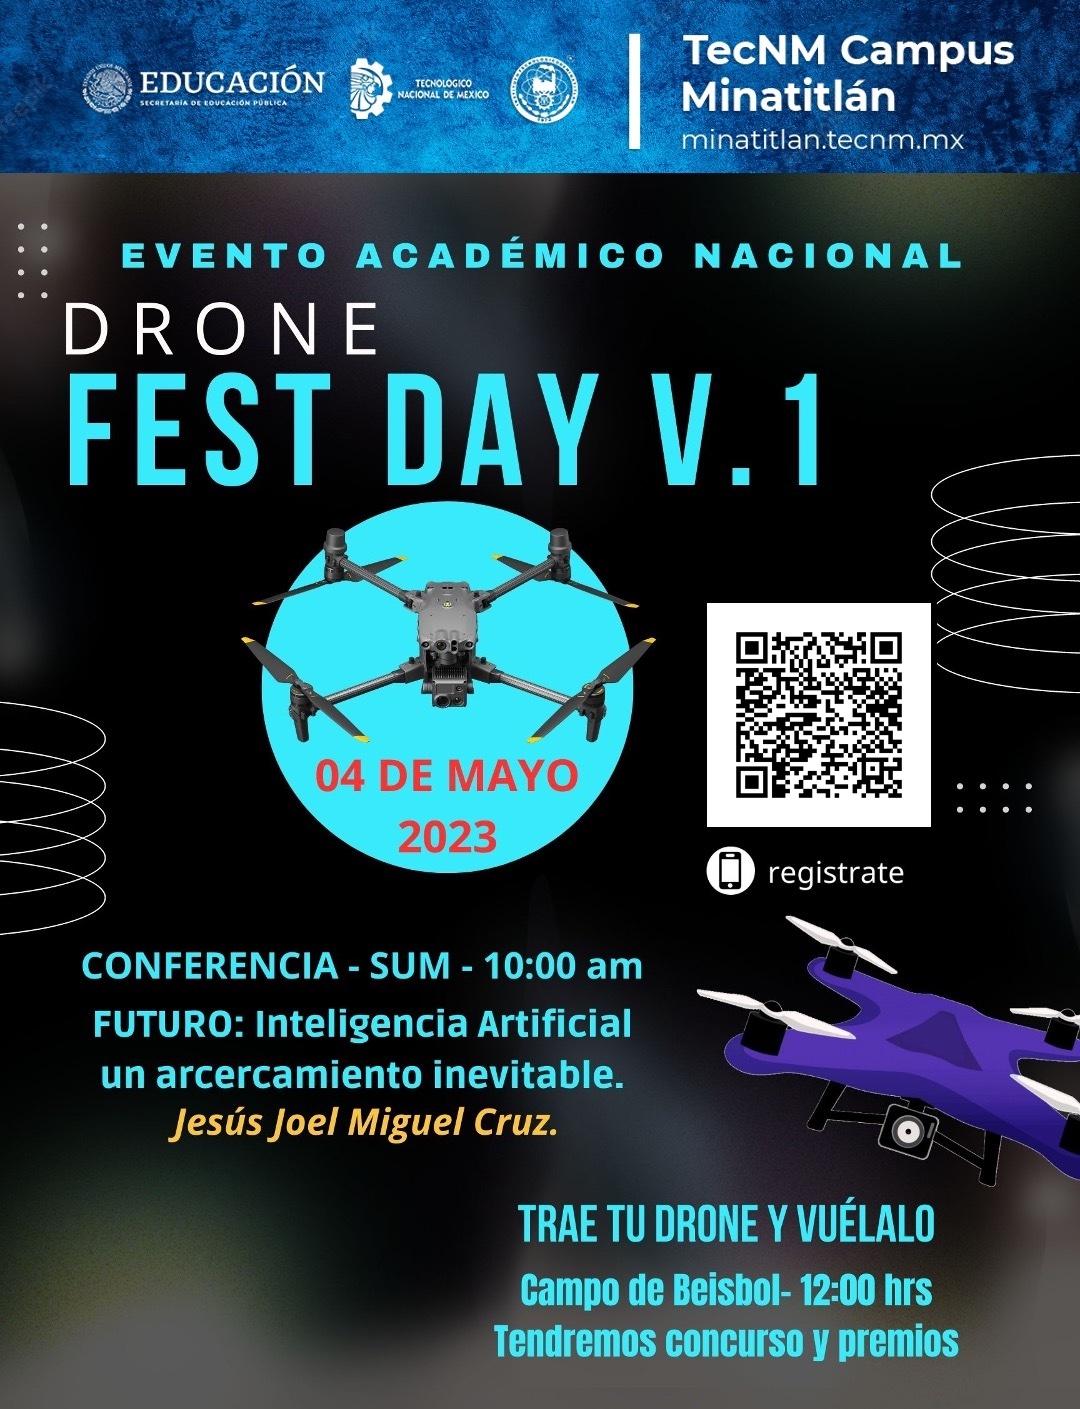 ASISTE AL “DRONE FEST DAY V. 1”